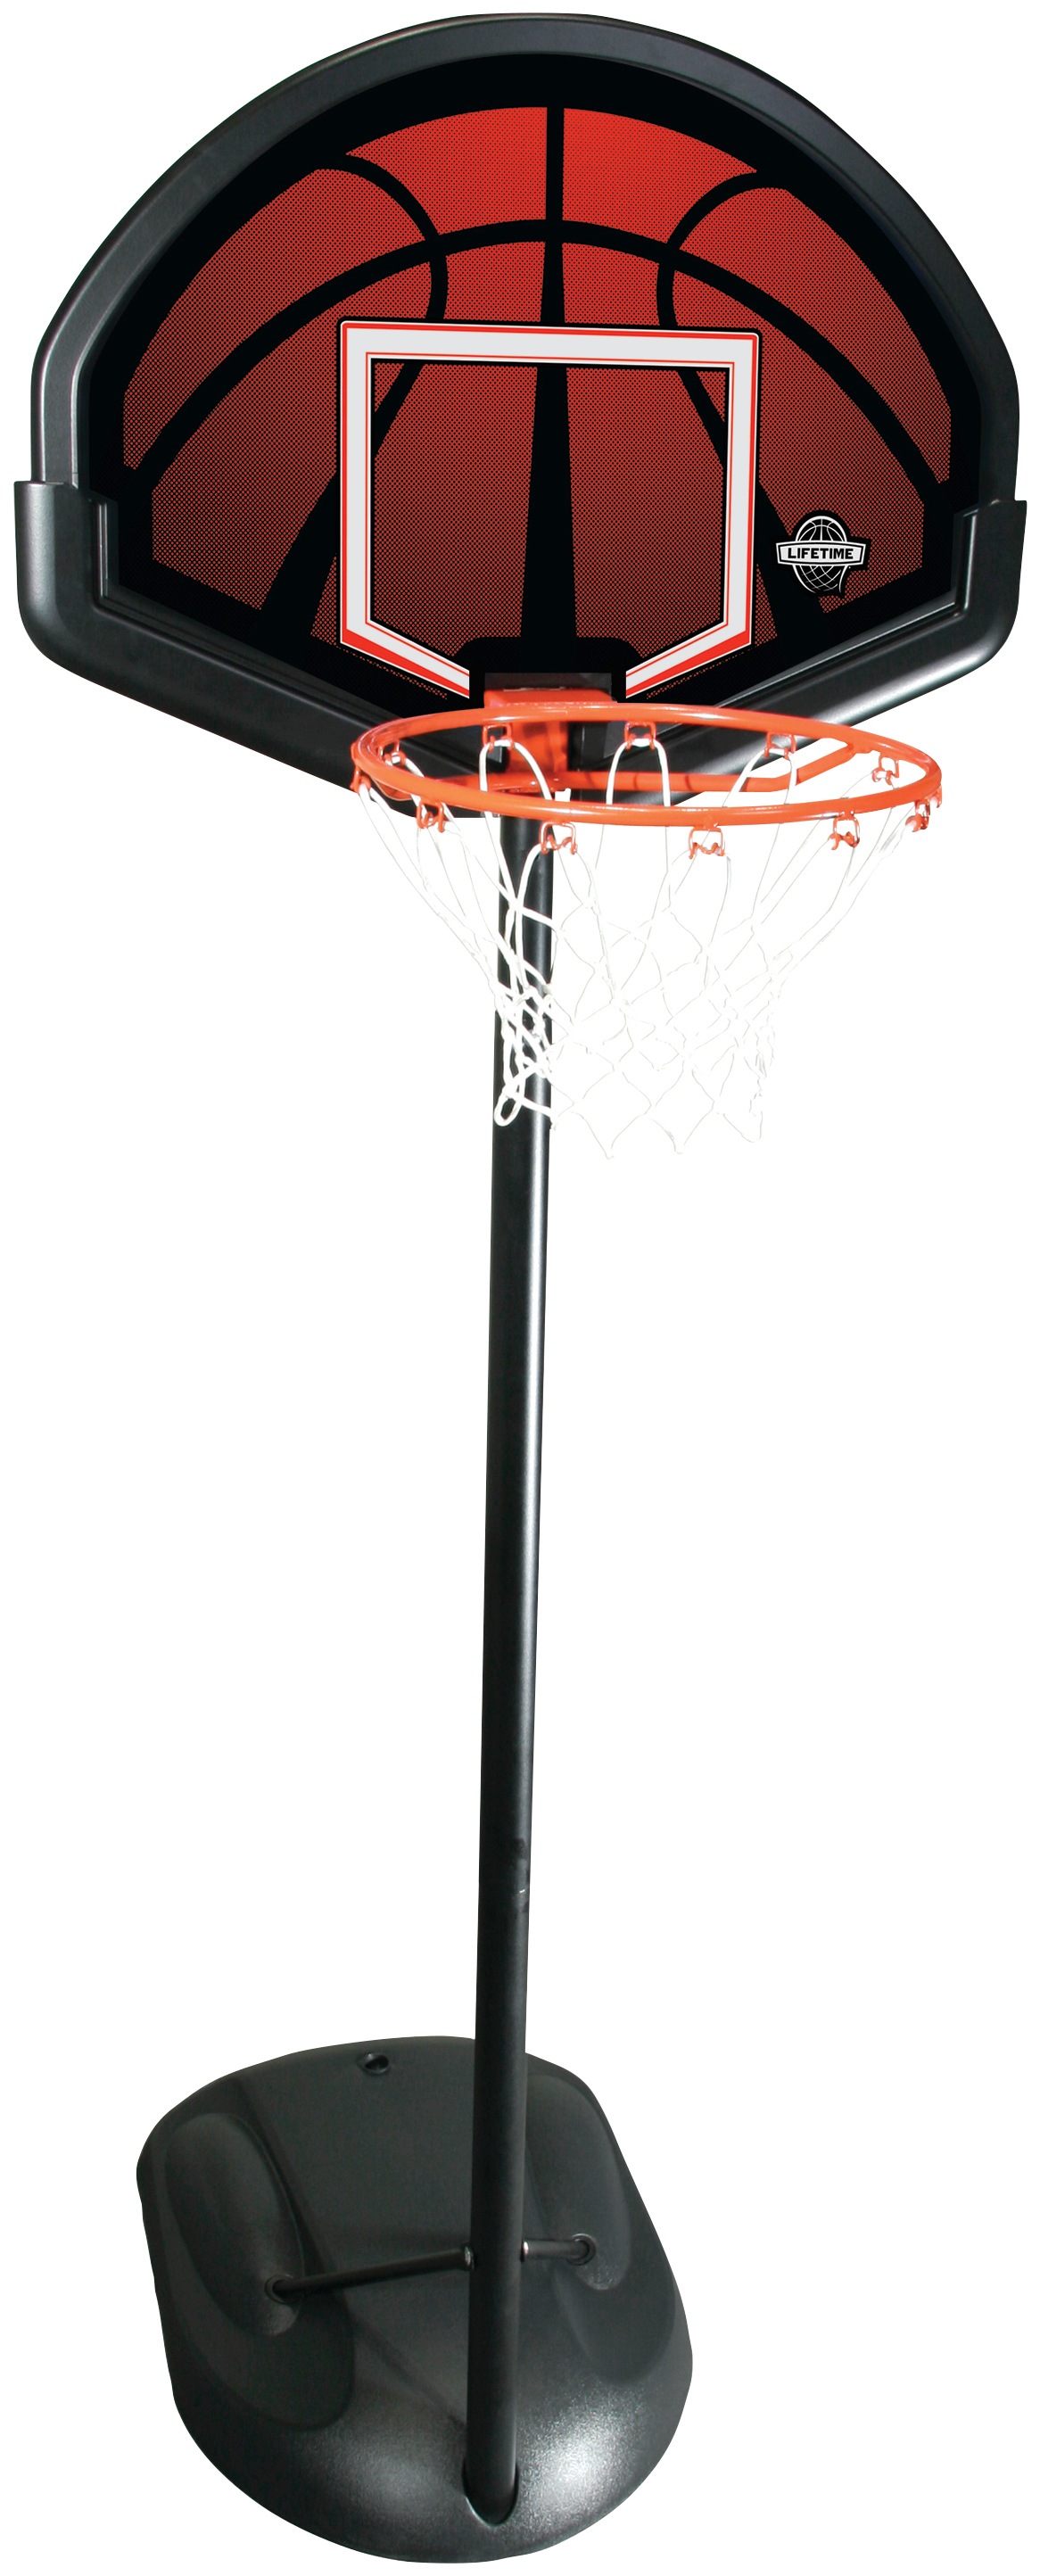 50NRTH Basketballkorb »Alabama«, höhenverstellbar | BAUR schwarz/rot